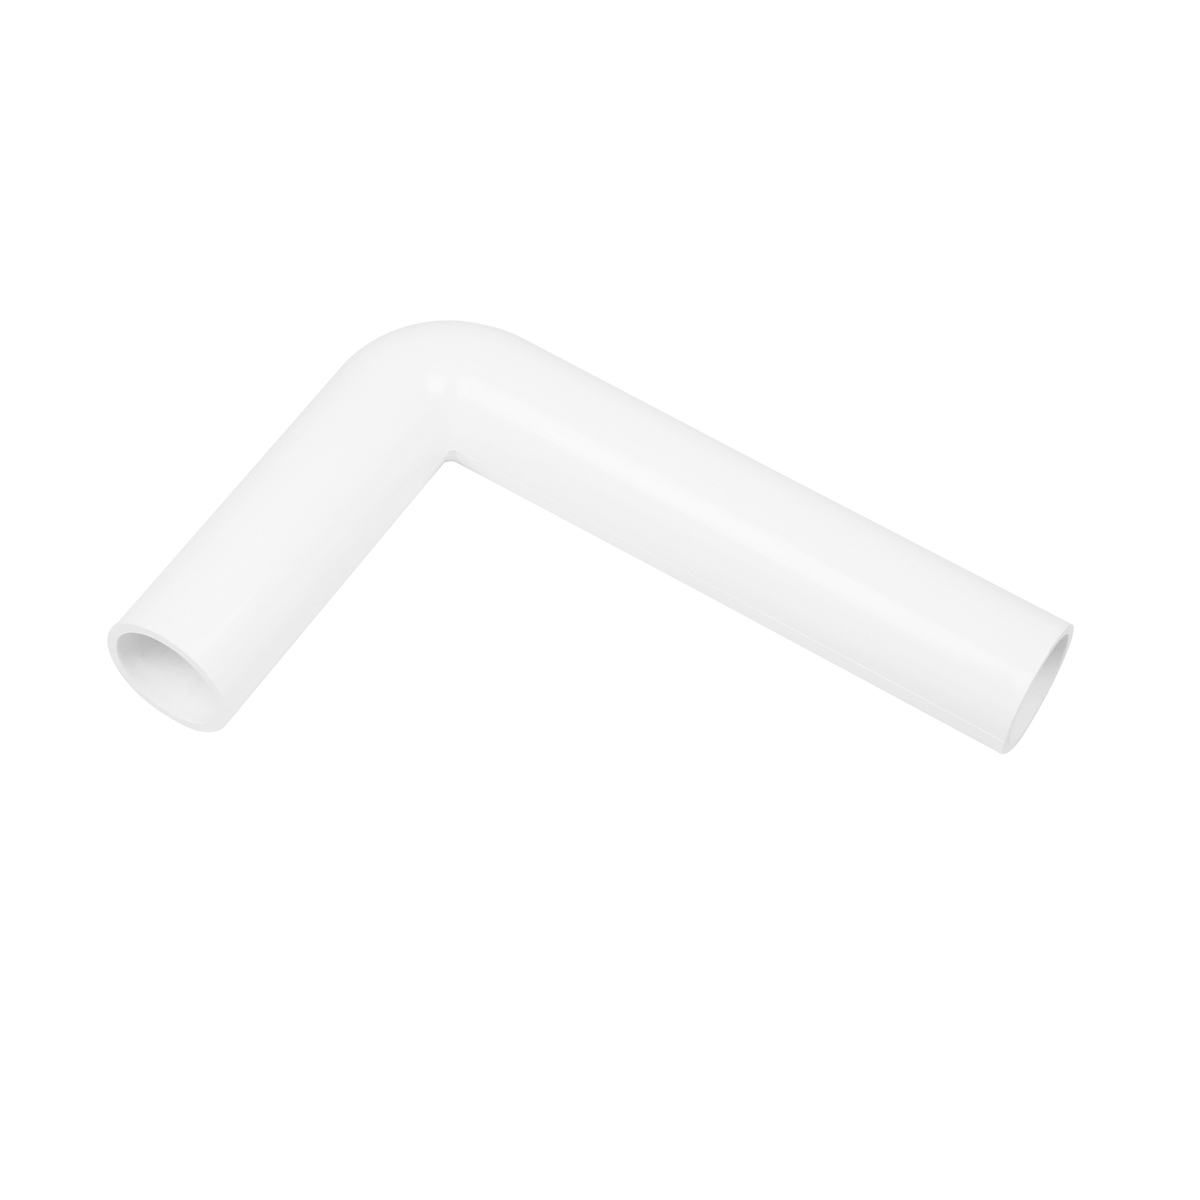 Pipe elbow D63 PVC white 215 x 163 mm Pipe elbow D63 PVC white 215 x 163 mm